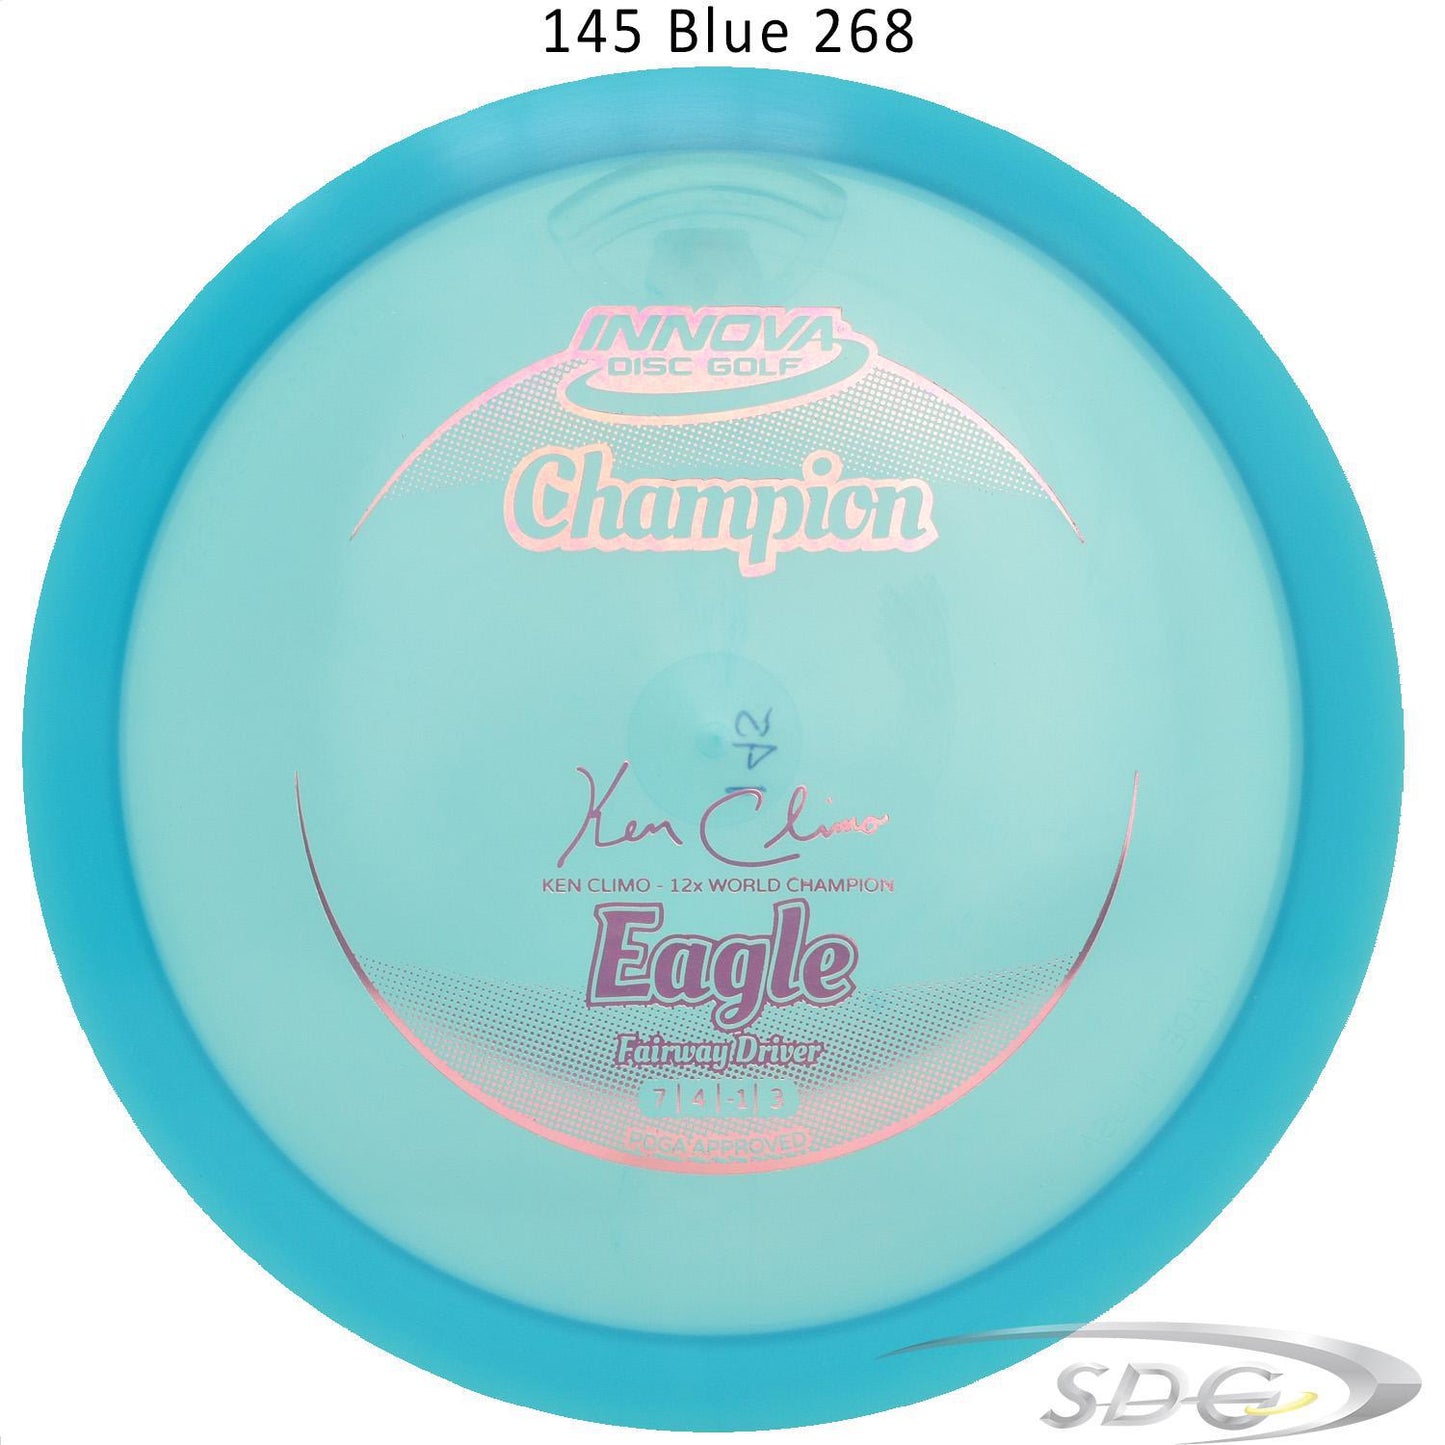 innova-champion-eagle-disc-golf-fairway-driver 145 Blue 268 